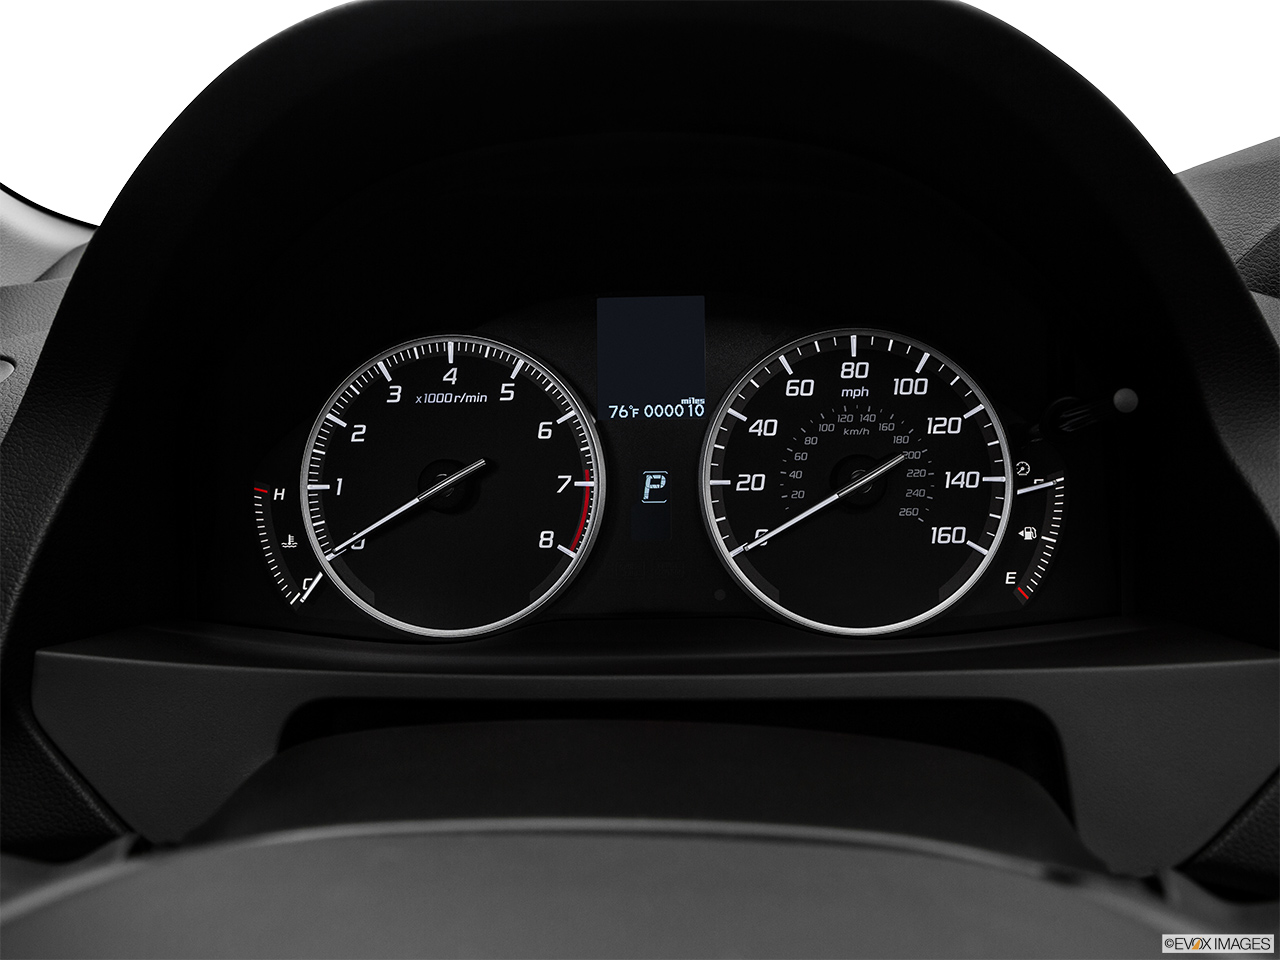 2017 Acura RDX AWD Speedometer/tachometer. 